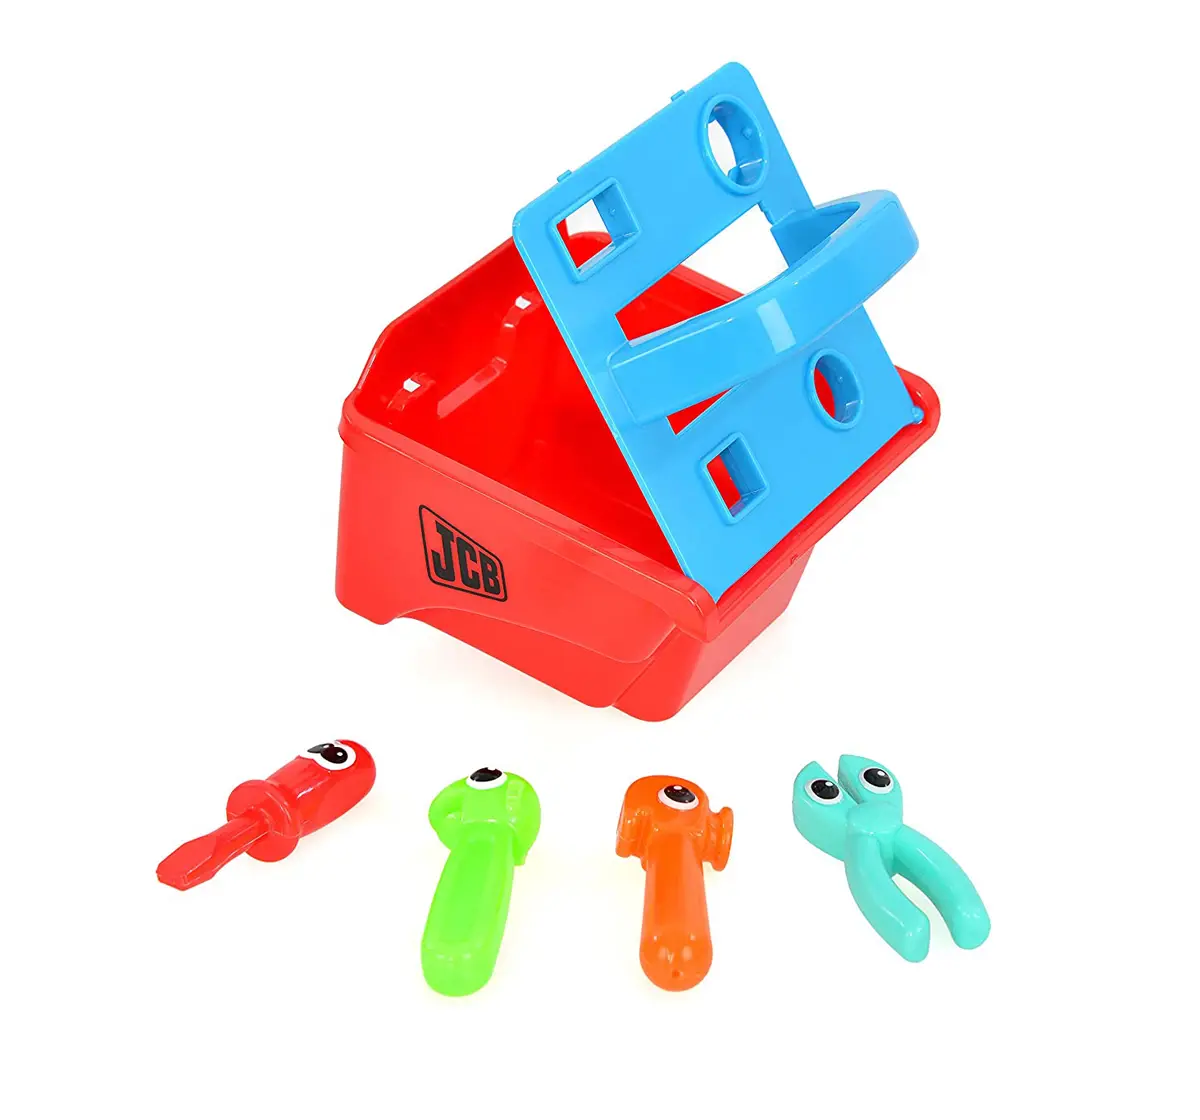 JCB My First Big Help full Doug Dumptruck Construction Toys for kids 12M+, Multicolour